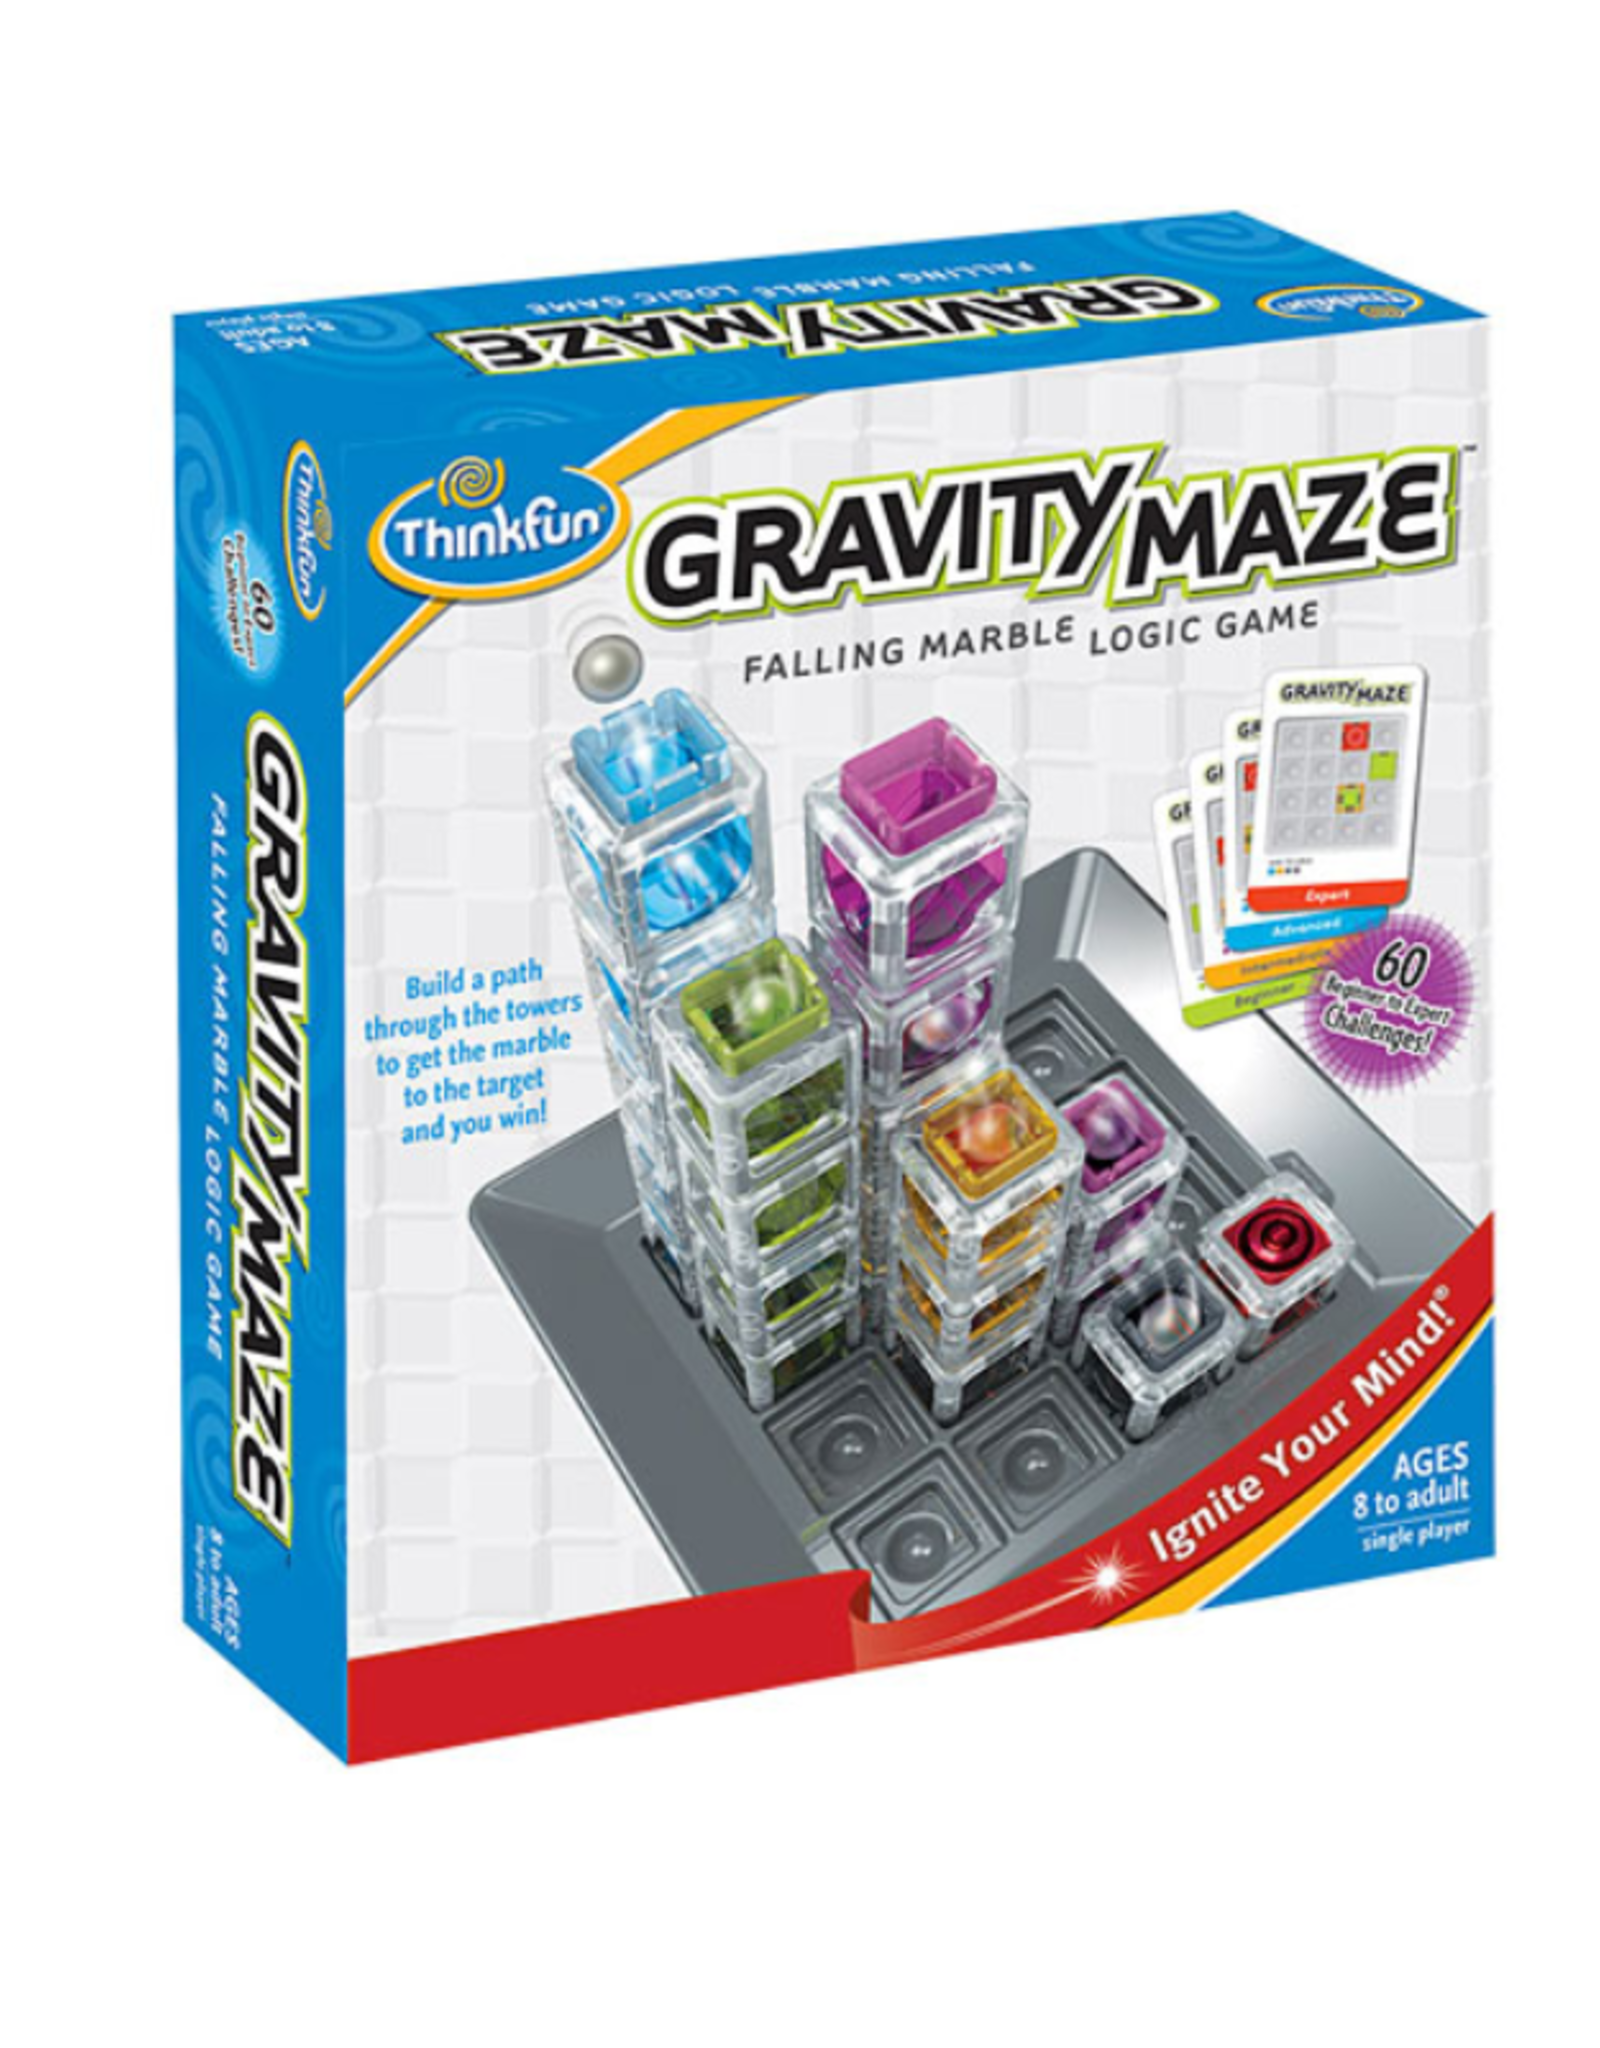 Ravensburger Gravity Maze